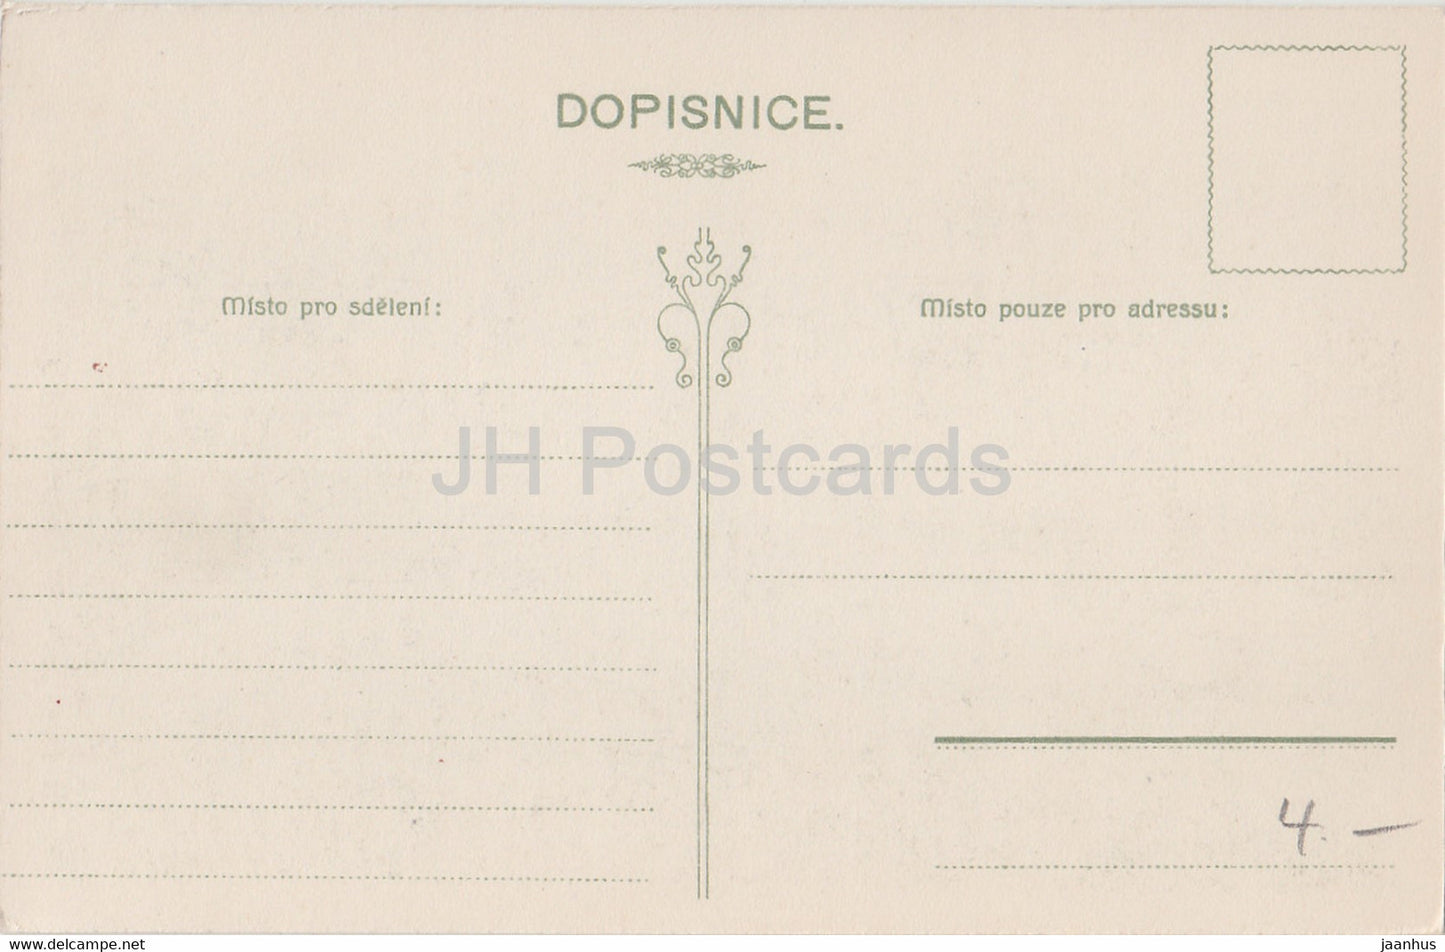 Nove Mesto - Pohled s Petrina - Depose 2 - alte Postkarte - Tschechische Republik - unbenutzt